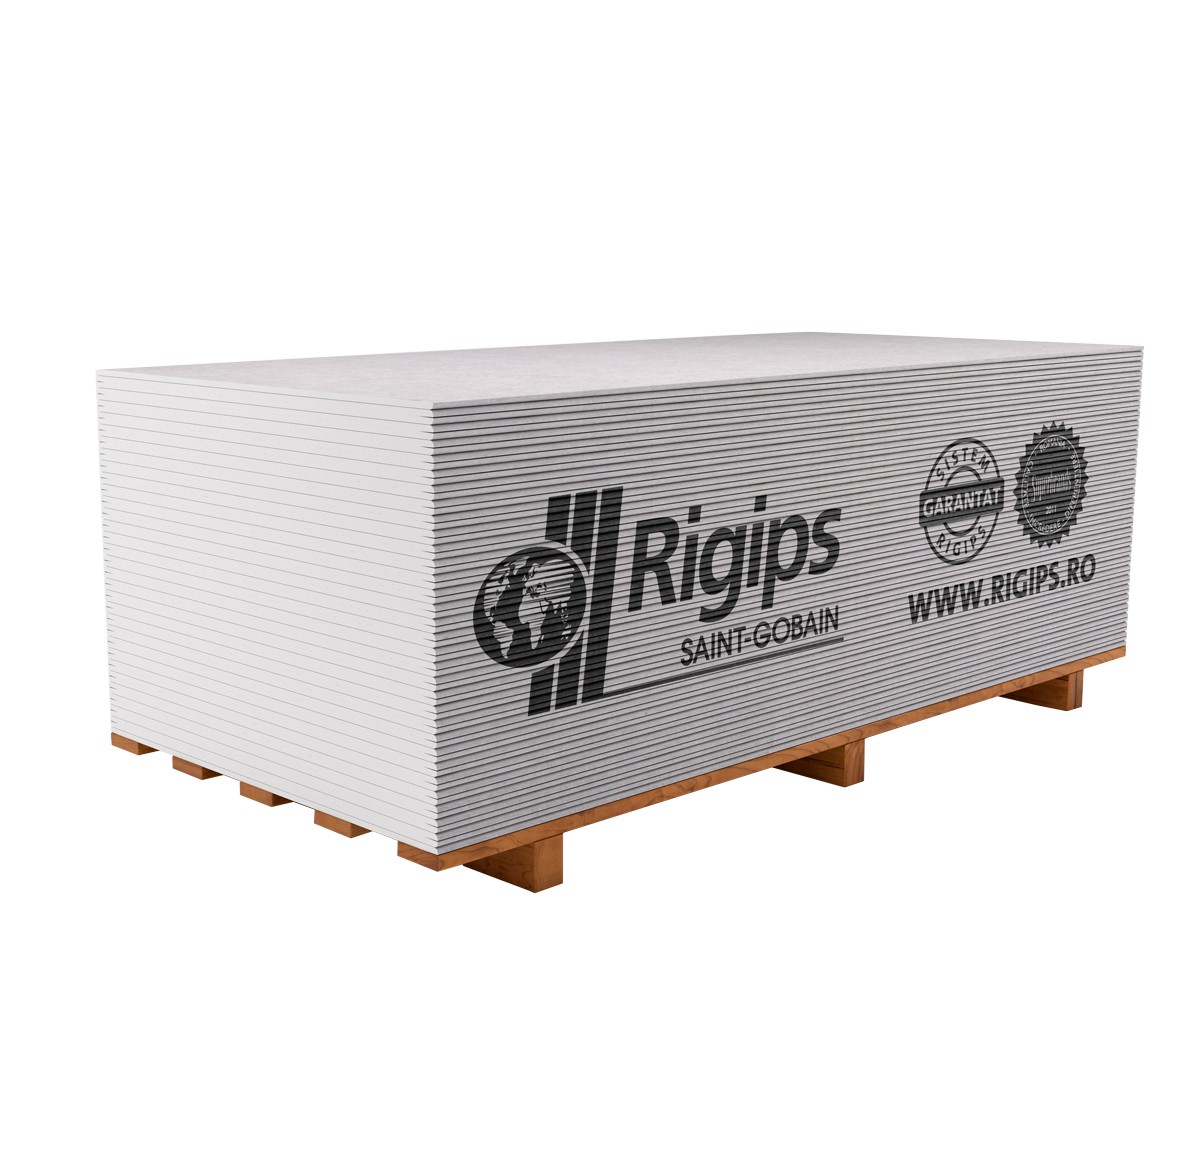 Common drywall tiles - Rigips RB 12.5 x 1200 x 2600 mm, maxbau.ro